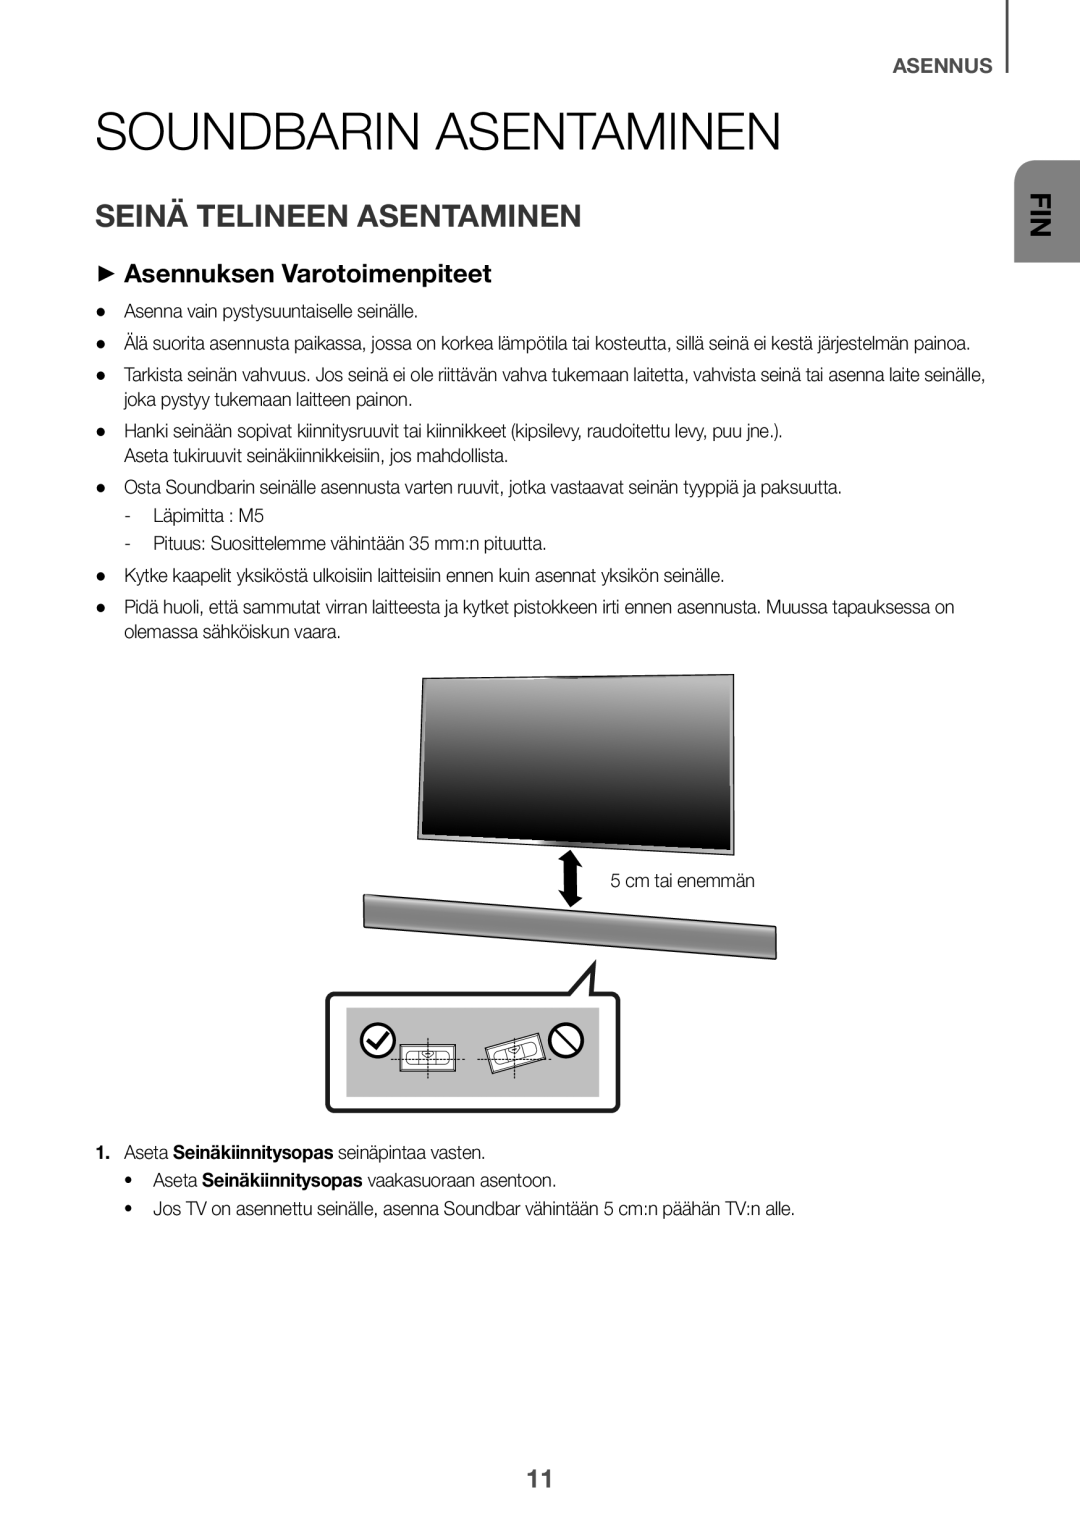 Samsung HW-K650/EN, HW-K651/EN Soundbarin asentaminen, Seinä telineen asentaminen ++Asennuksen Varotoimenpiteet, Asennus 